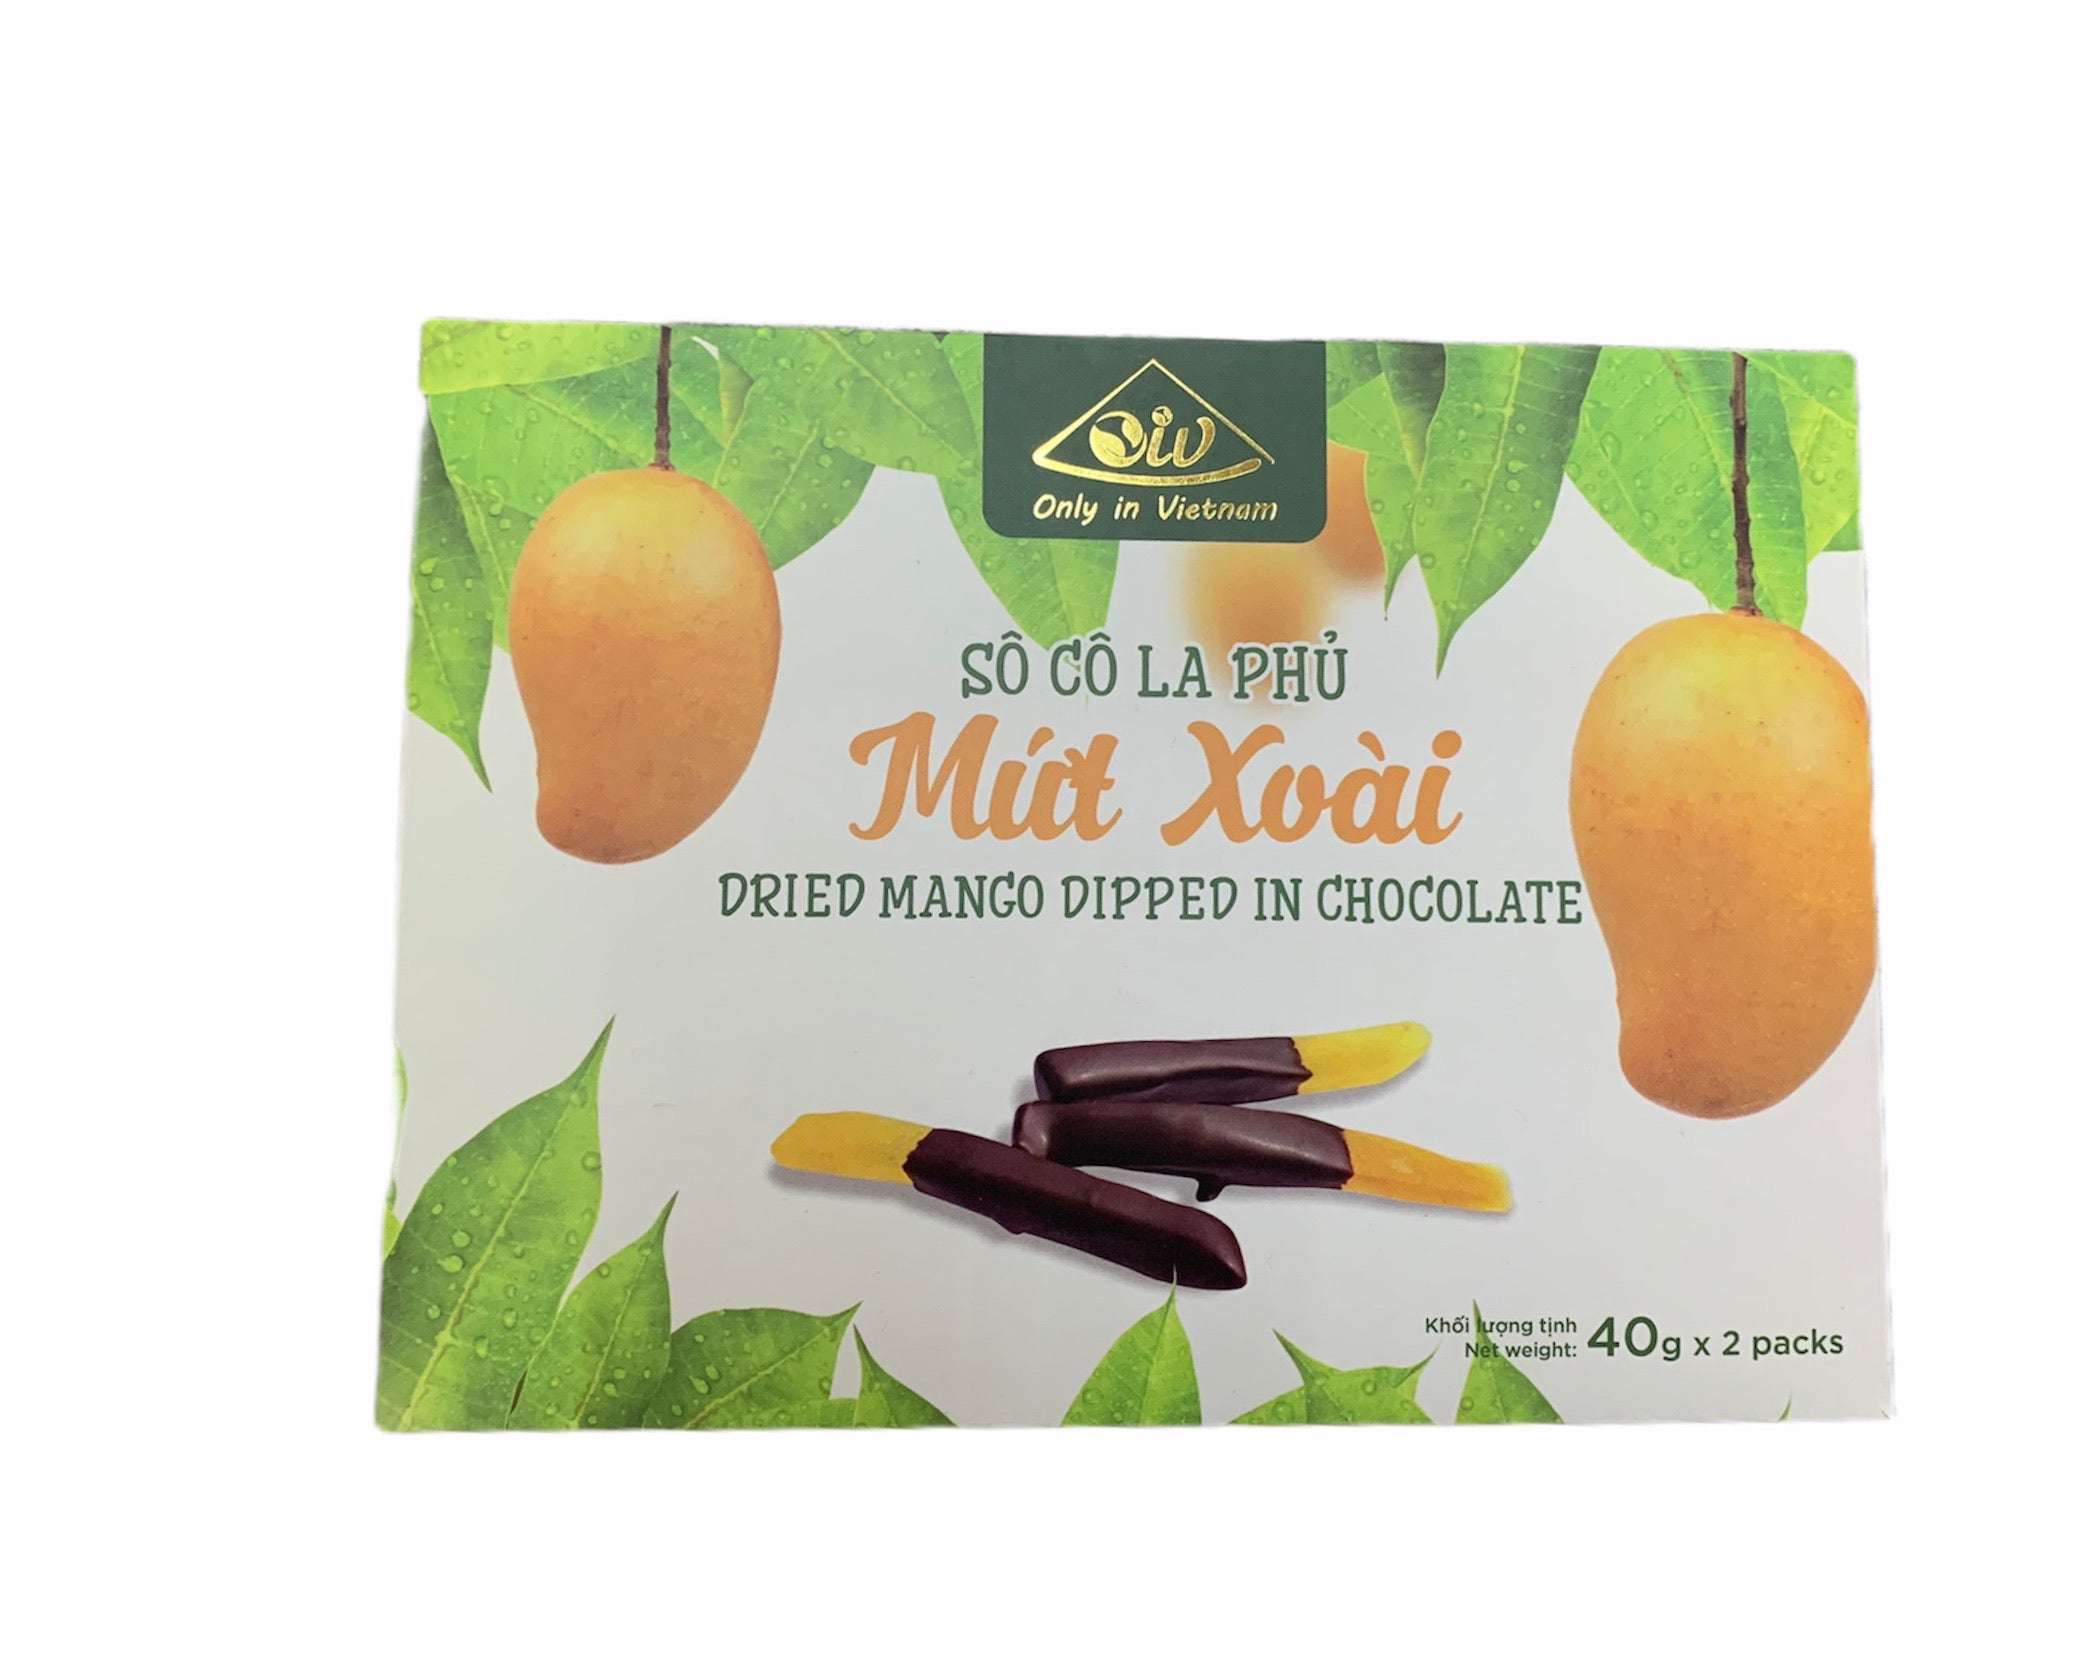 Getrocknete Mango in Schokolade getaucht 40g- So co la phủ mứt xoài 40g